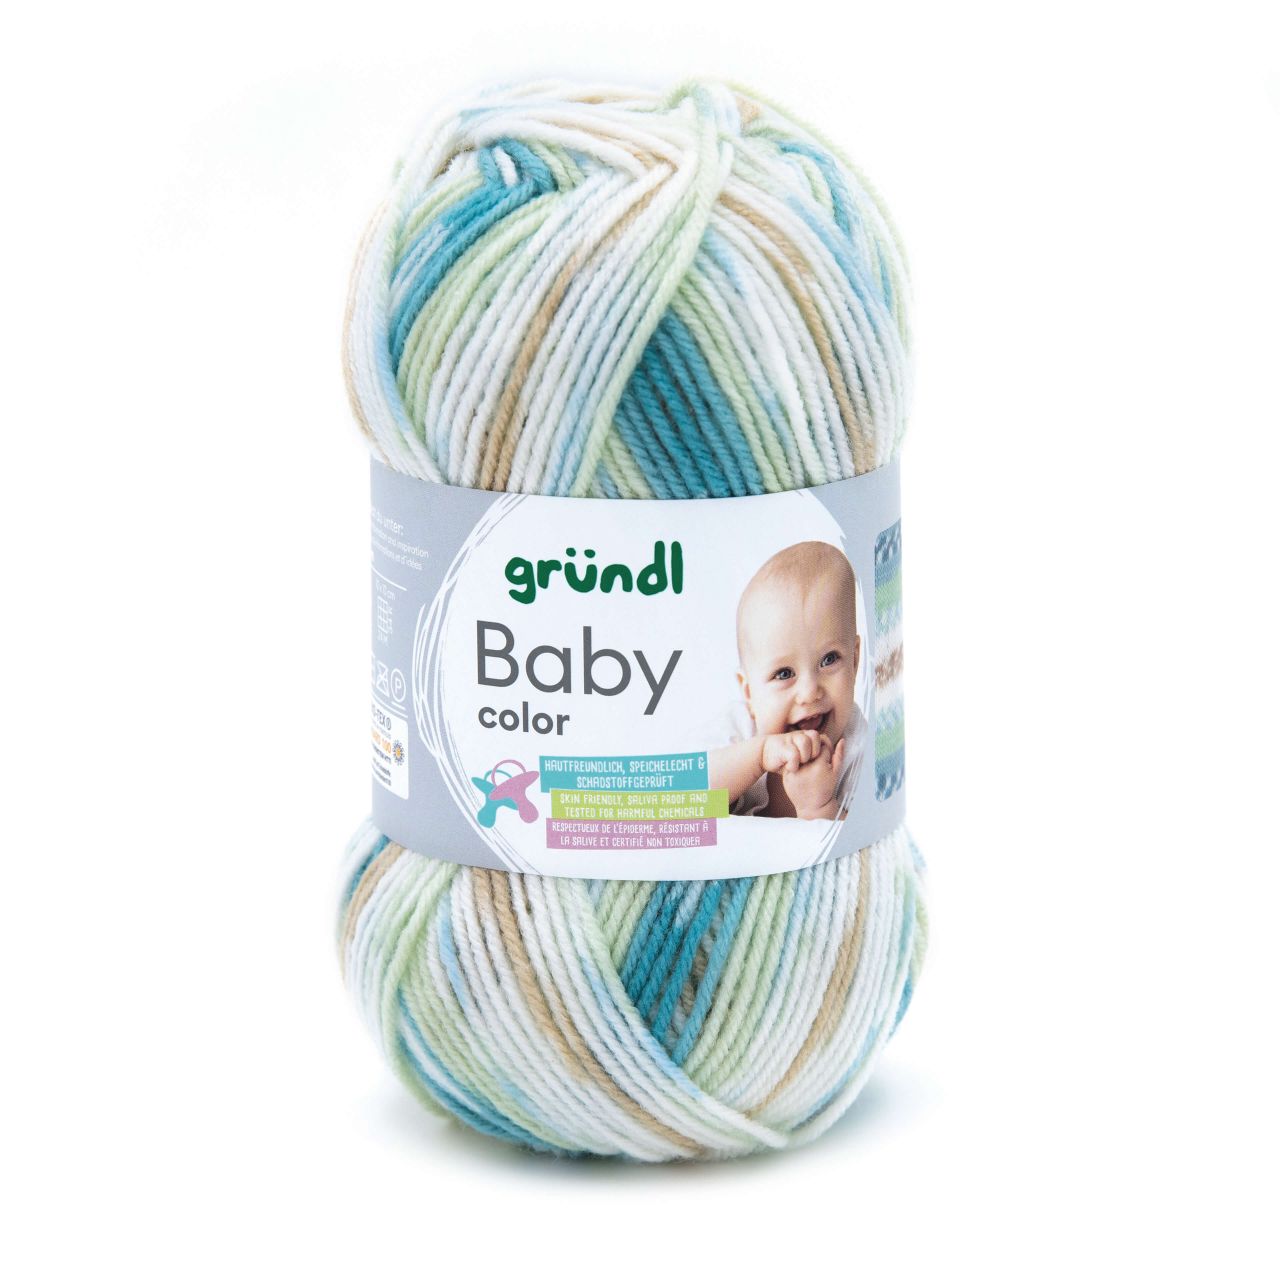 Gründl Wolle Baby color 50 g aquamarin braun mint natur multicolor von gründl